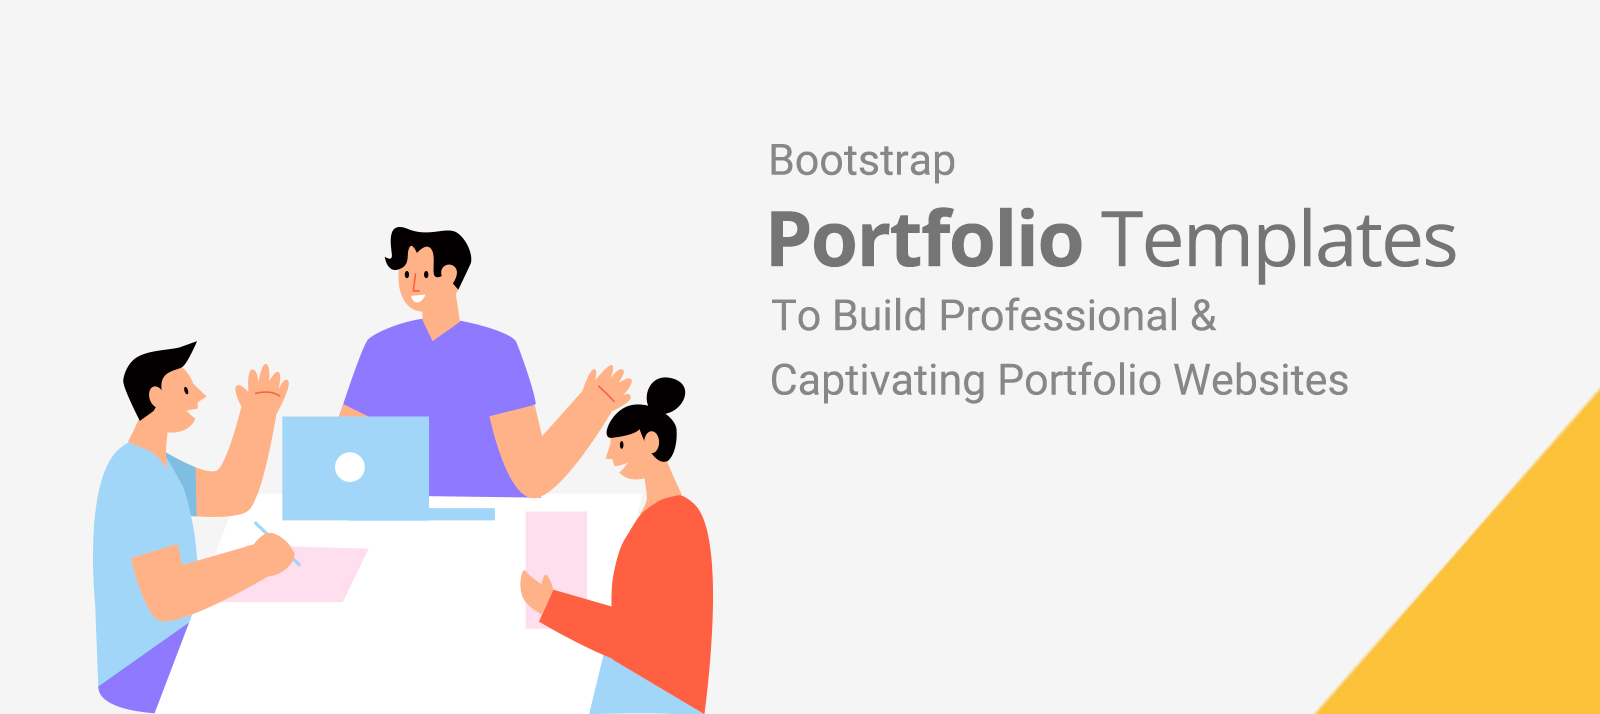  Bootstrap Portfolio Templates To Build Professional & Captivating Portfolio Websites 